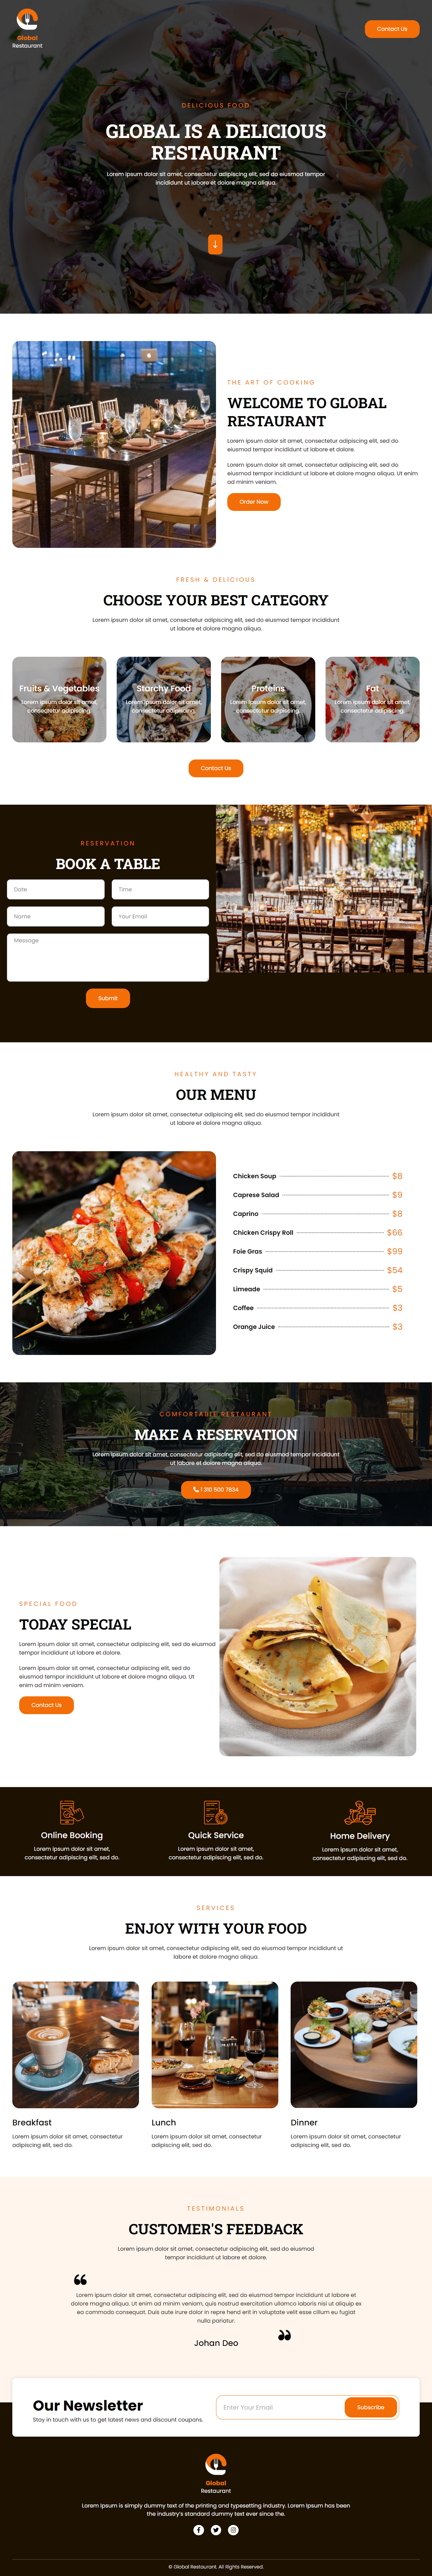 Restaurant-website-template-2